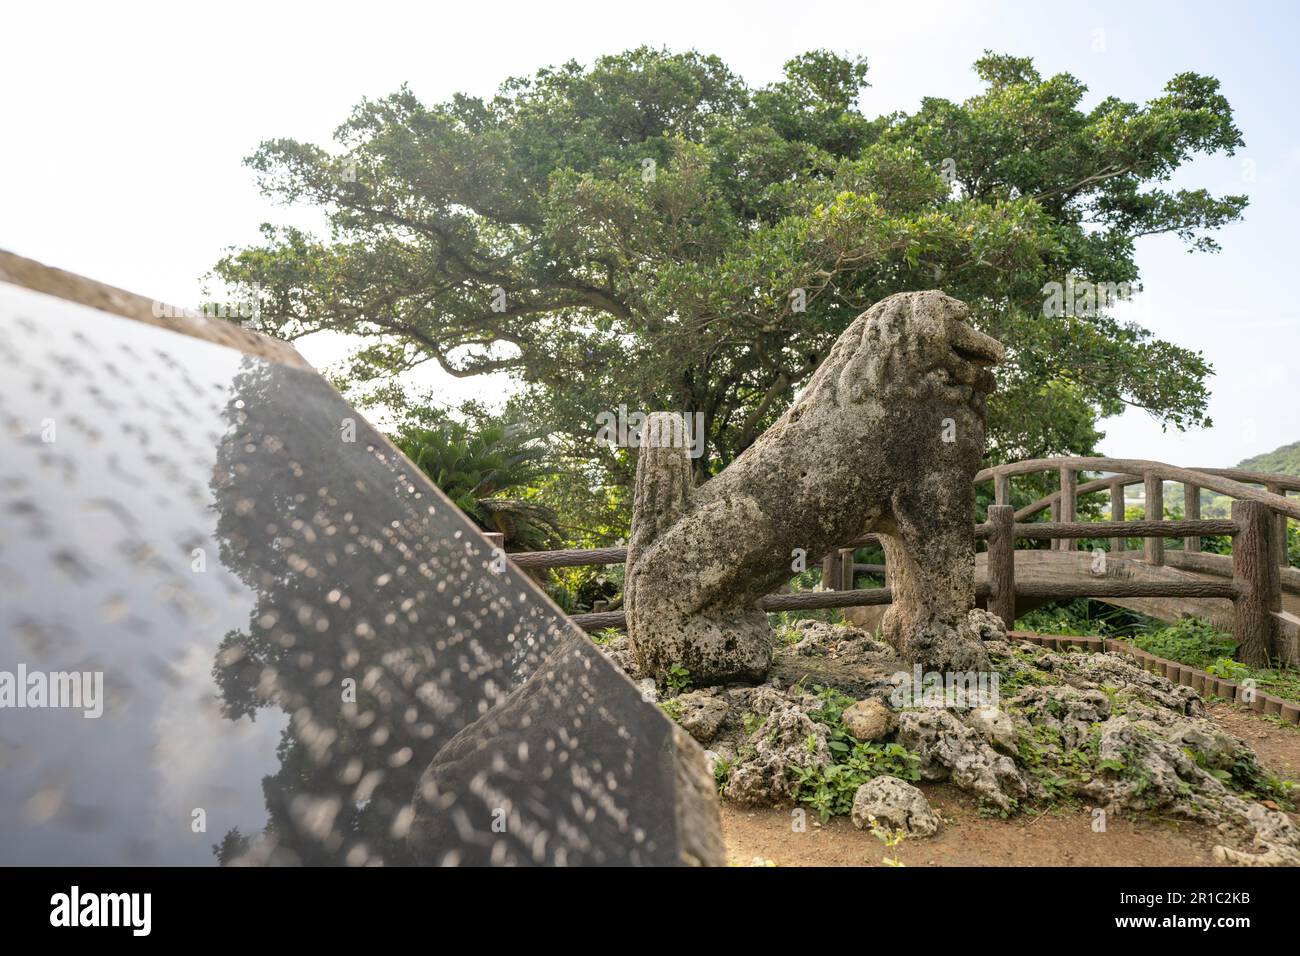 Tomori Stone Lion, eine Steinshisa in Yaese, Shimajiri, Okinawa, sah Bilder des Zweiten Weltkriegs. Stockfoto